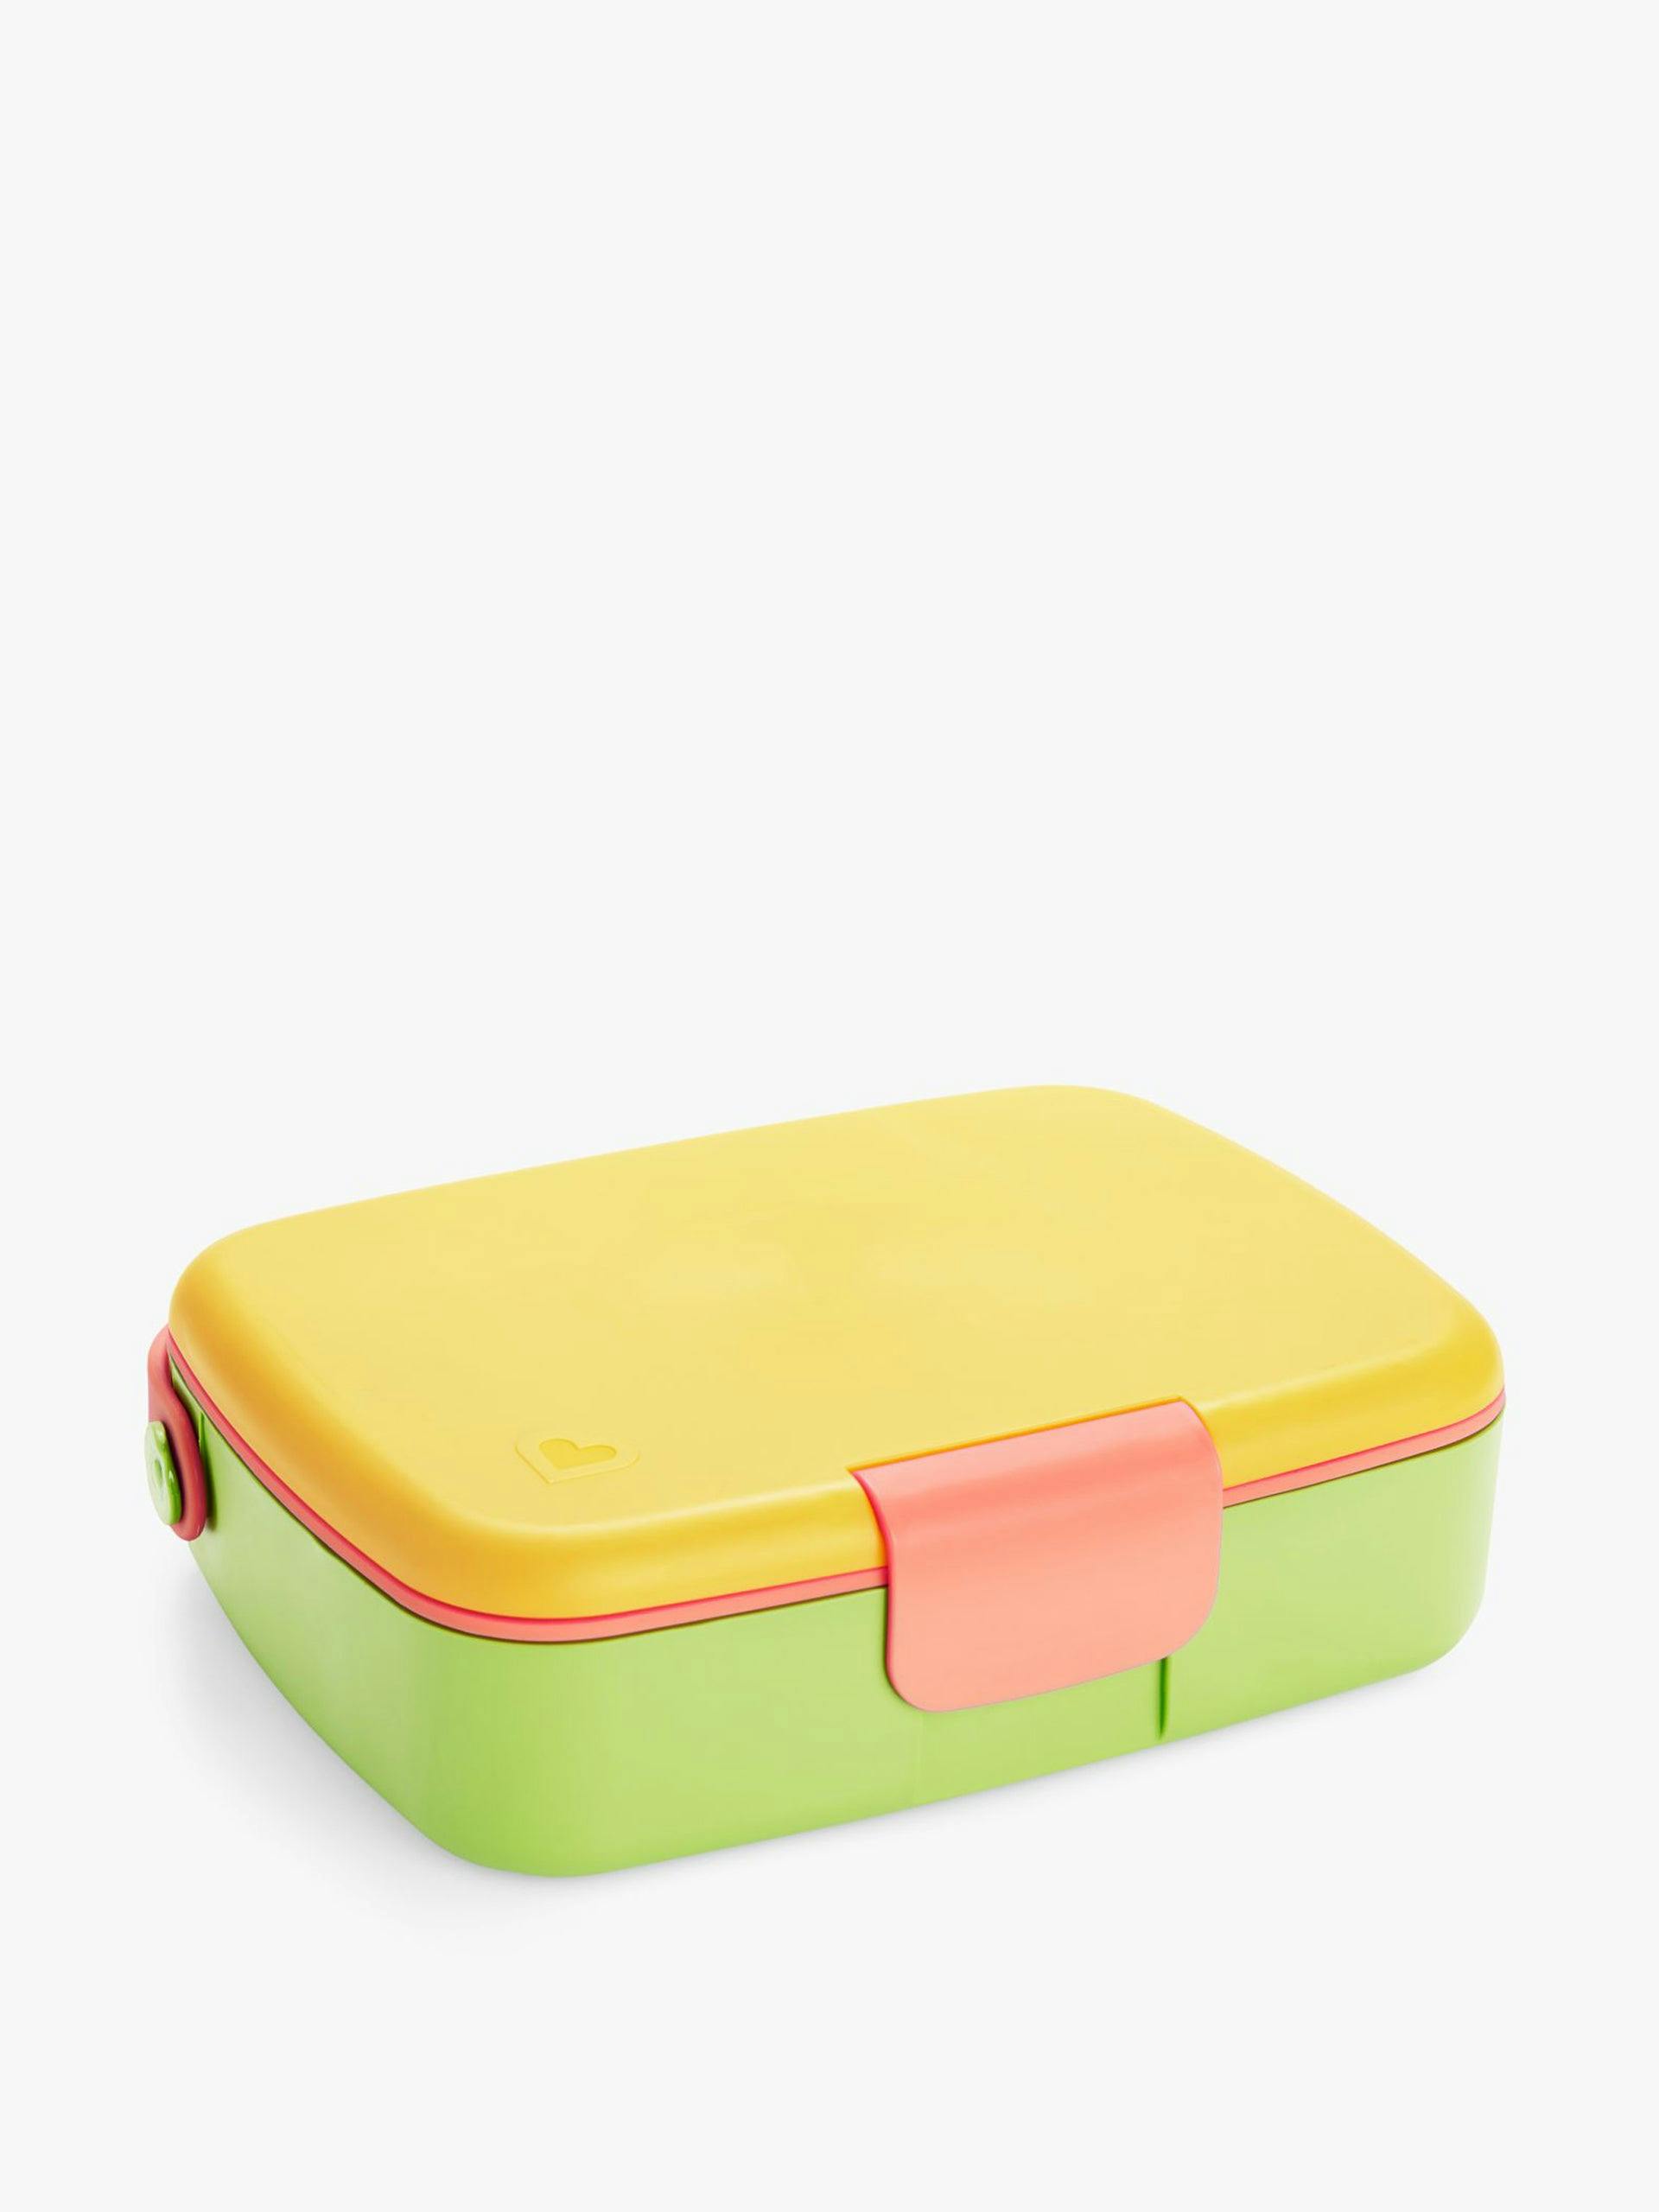 Bento box lunch box